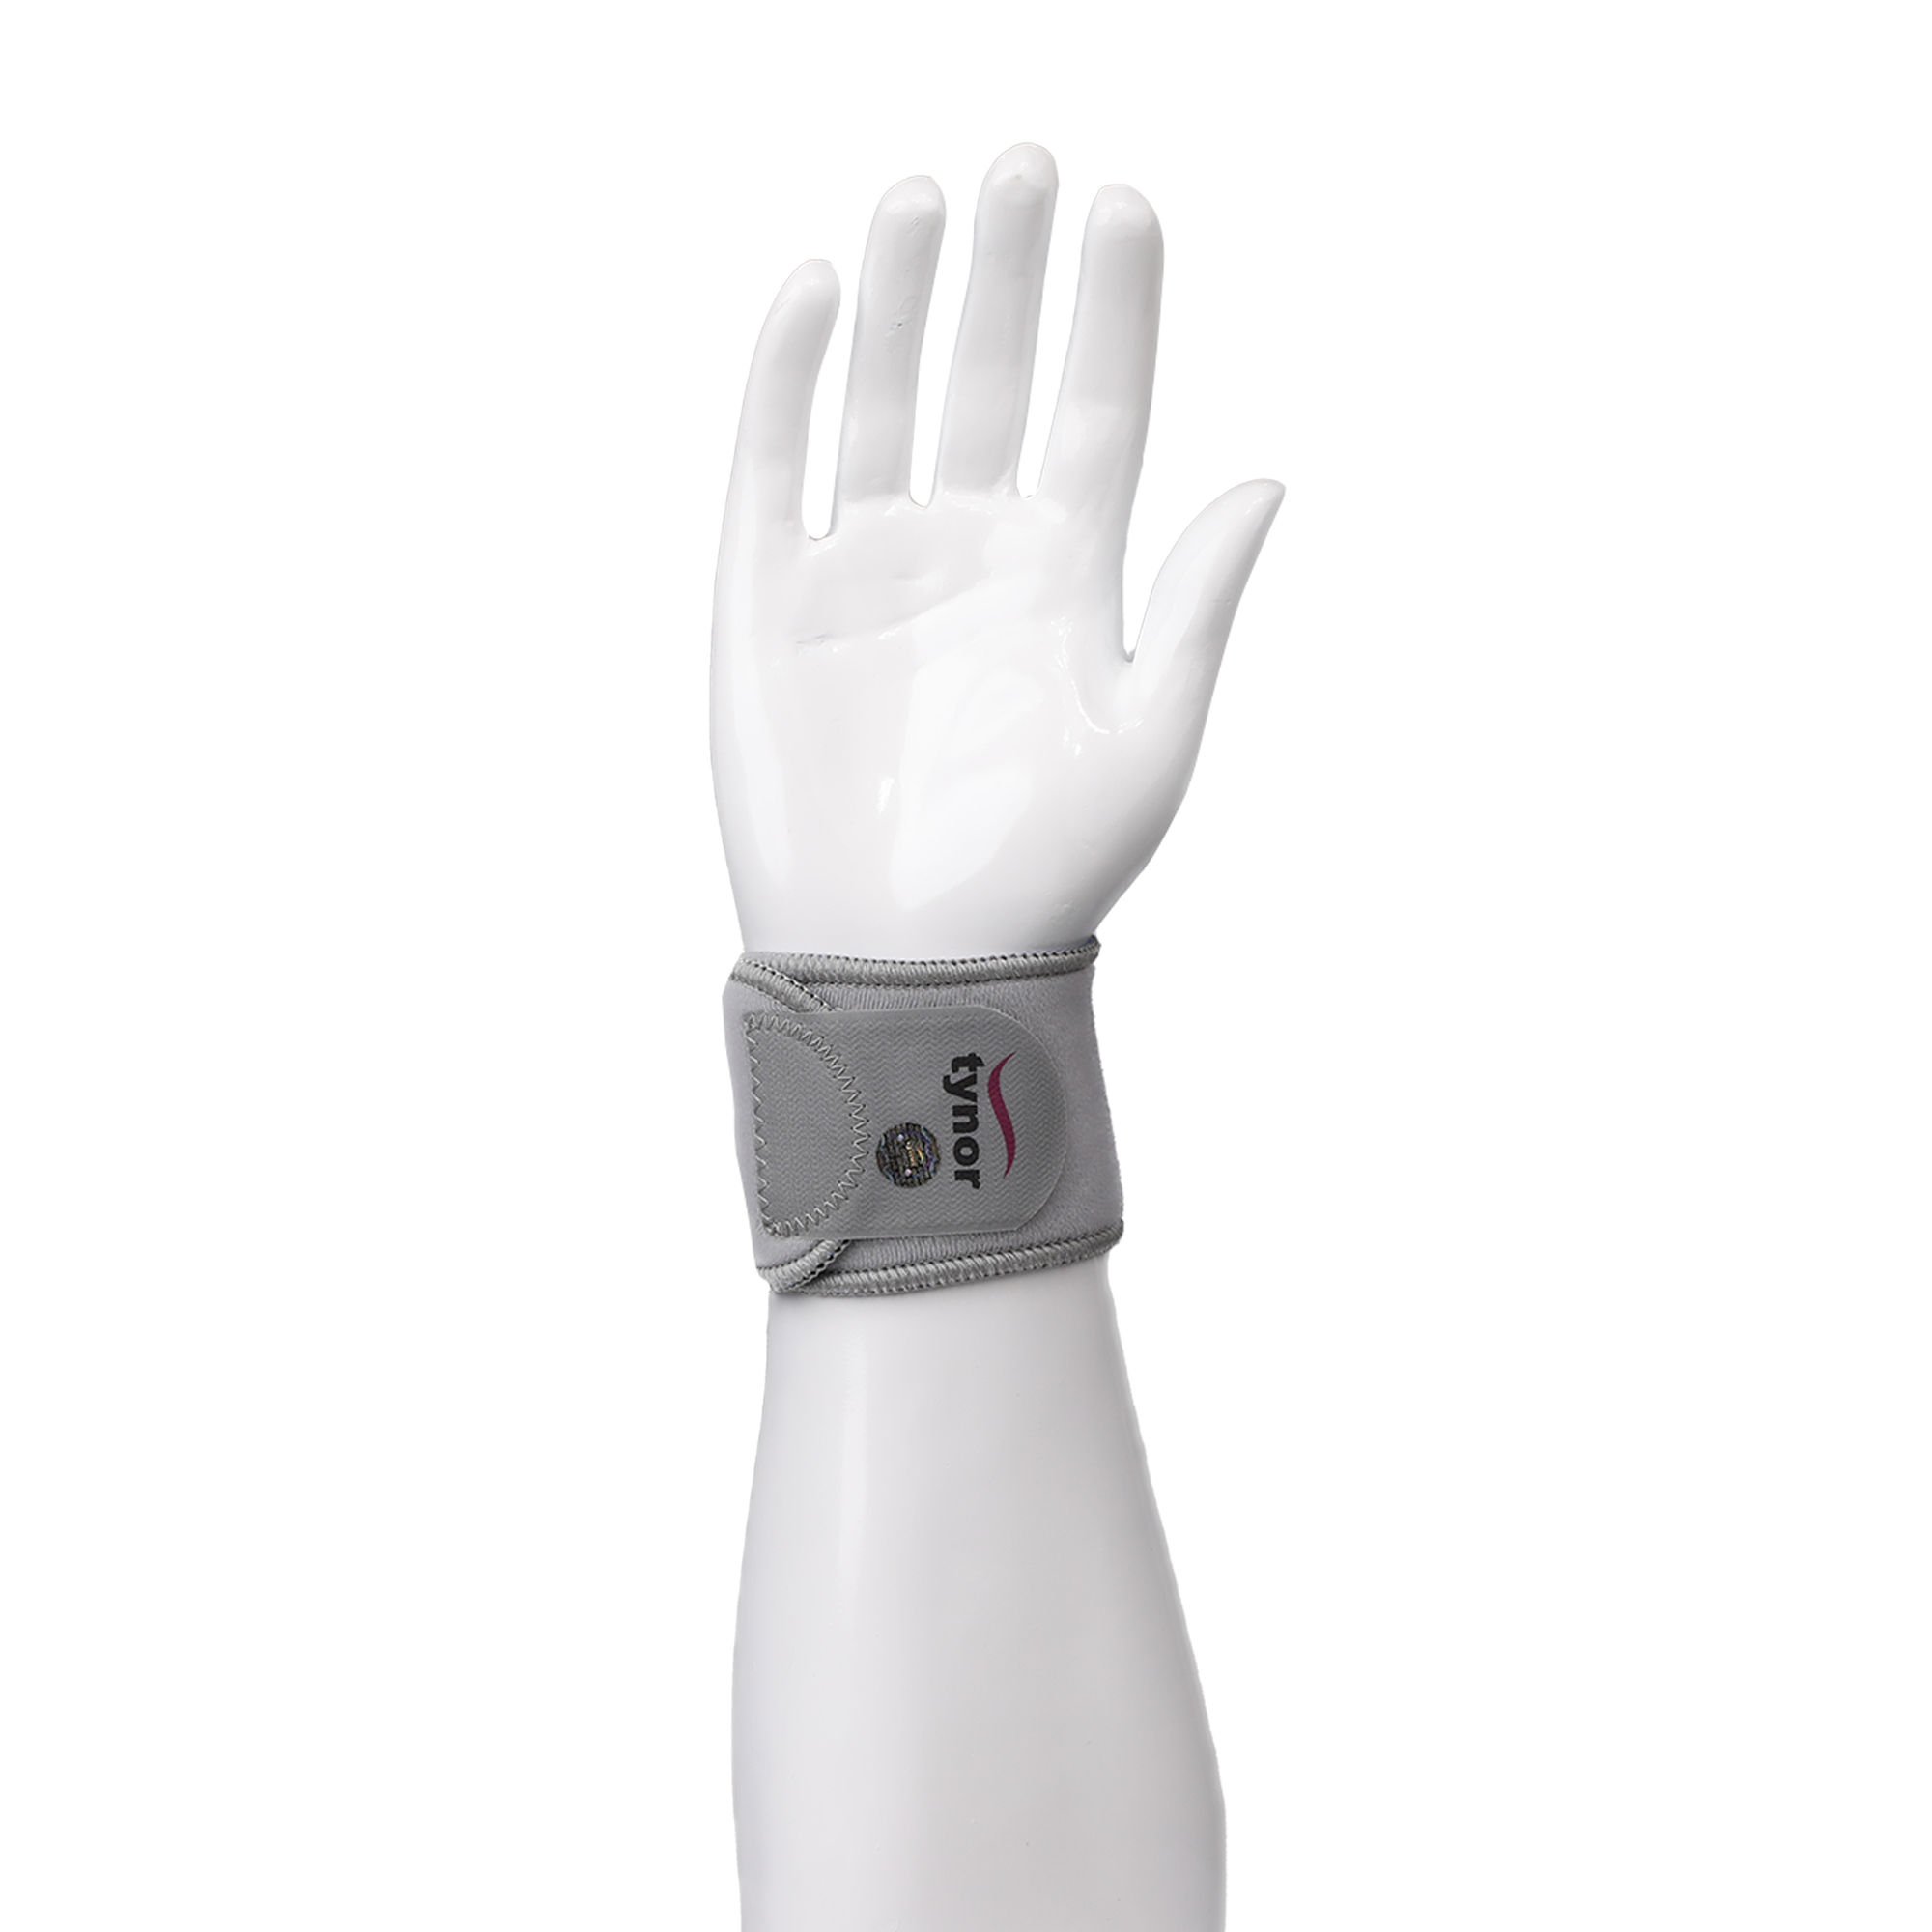 Buy Tynor Wrist Wrap (Neoprene) Uni, 1 Count Online